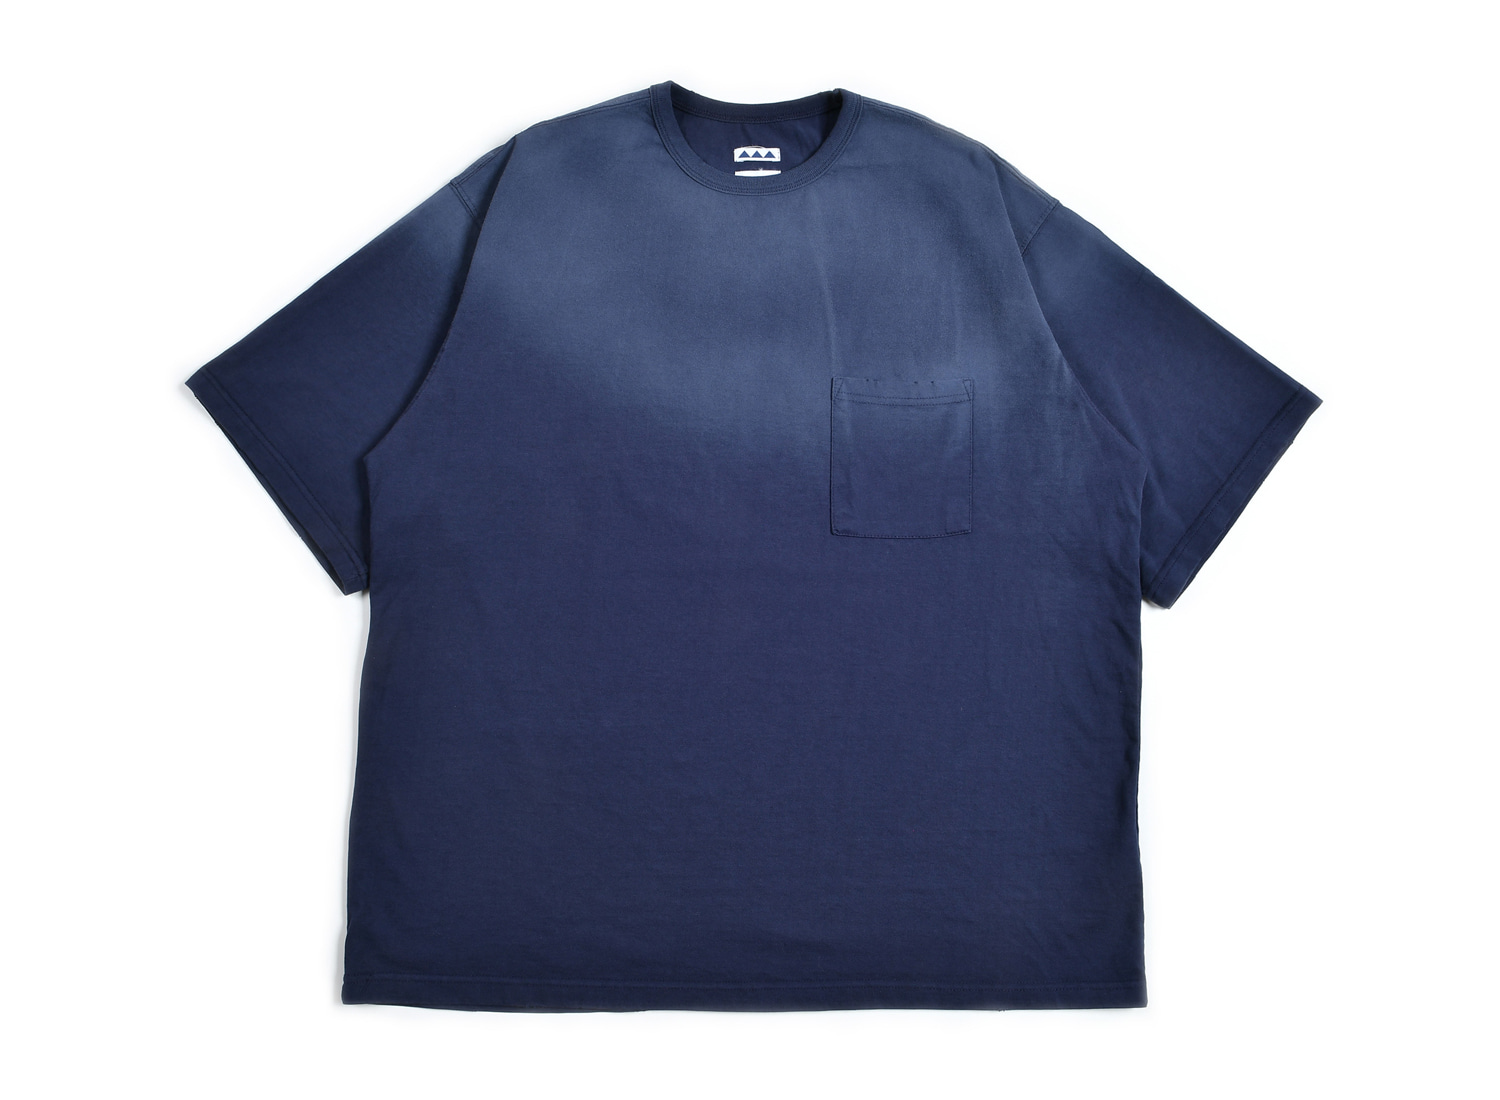 Bleach pocket S/S t-shirt Purple navy